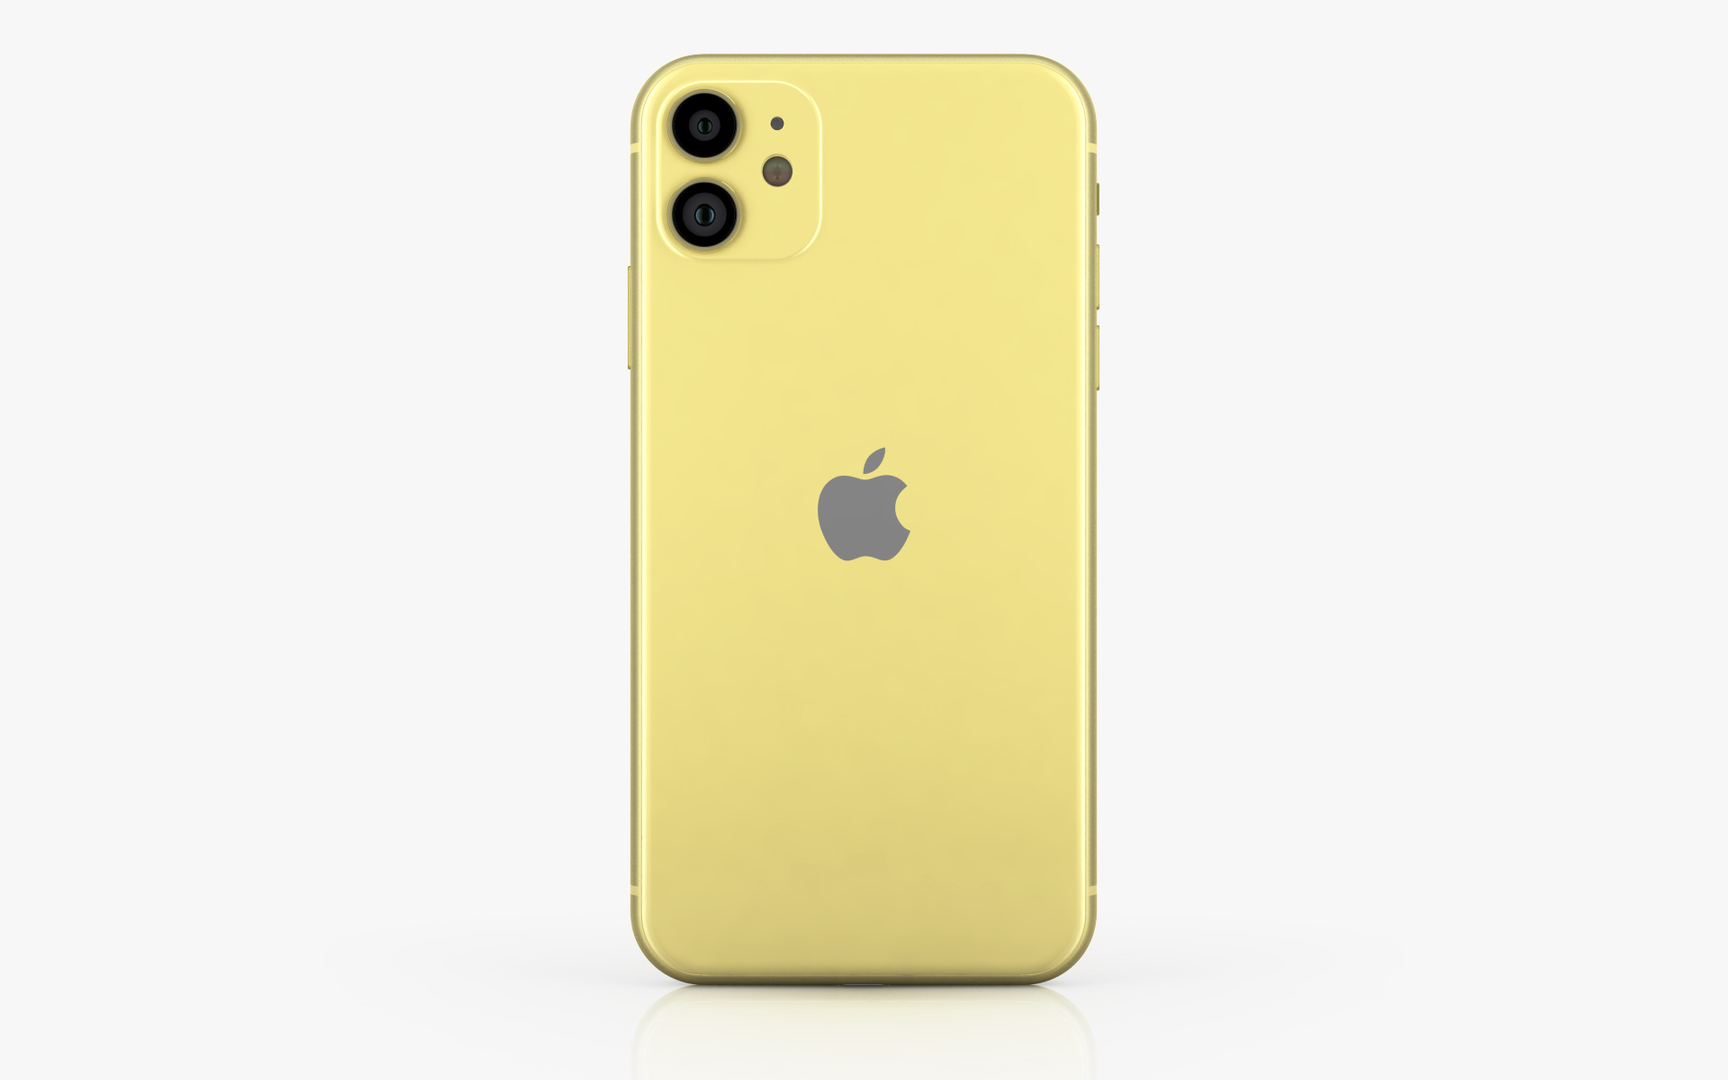 apple iphone 11 color model https://p.turbosquid.com/ts-thumb/7g/G5nufe/VlXDgcUF/iphone11_yellow/jpg/1568923075/1920x1080/turn_fit_q99/eb30426a012f0e93ad0aec64ffb2ec1246490dc2/iphone11_yellow-1.jpg